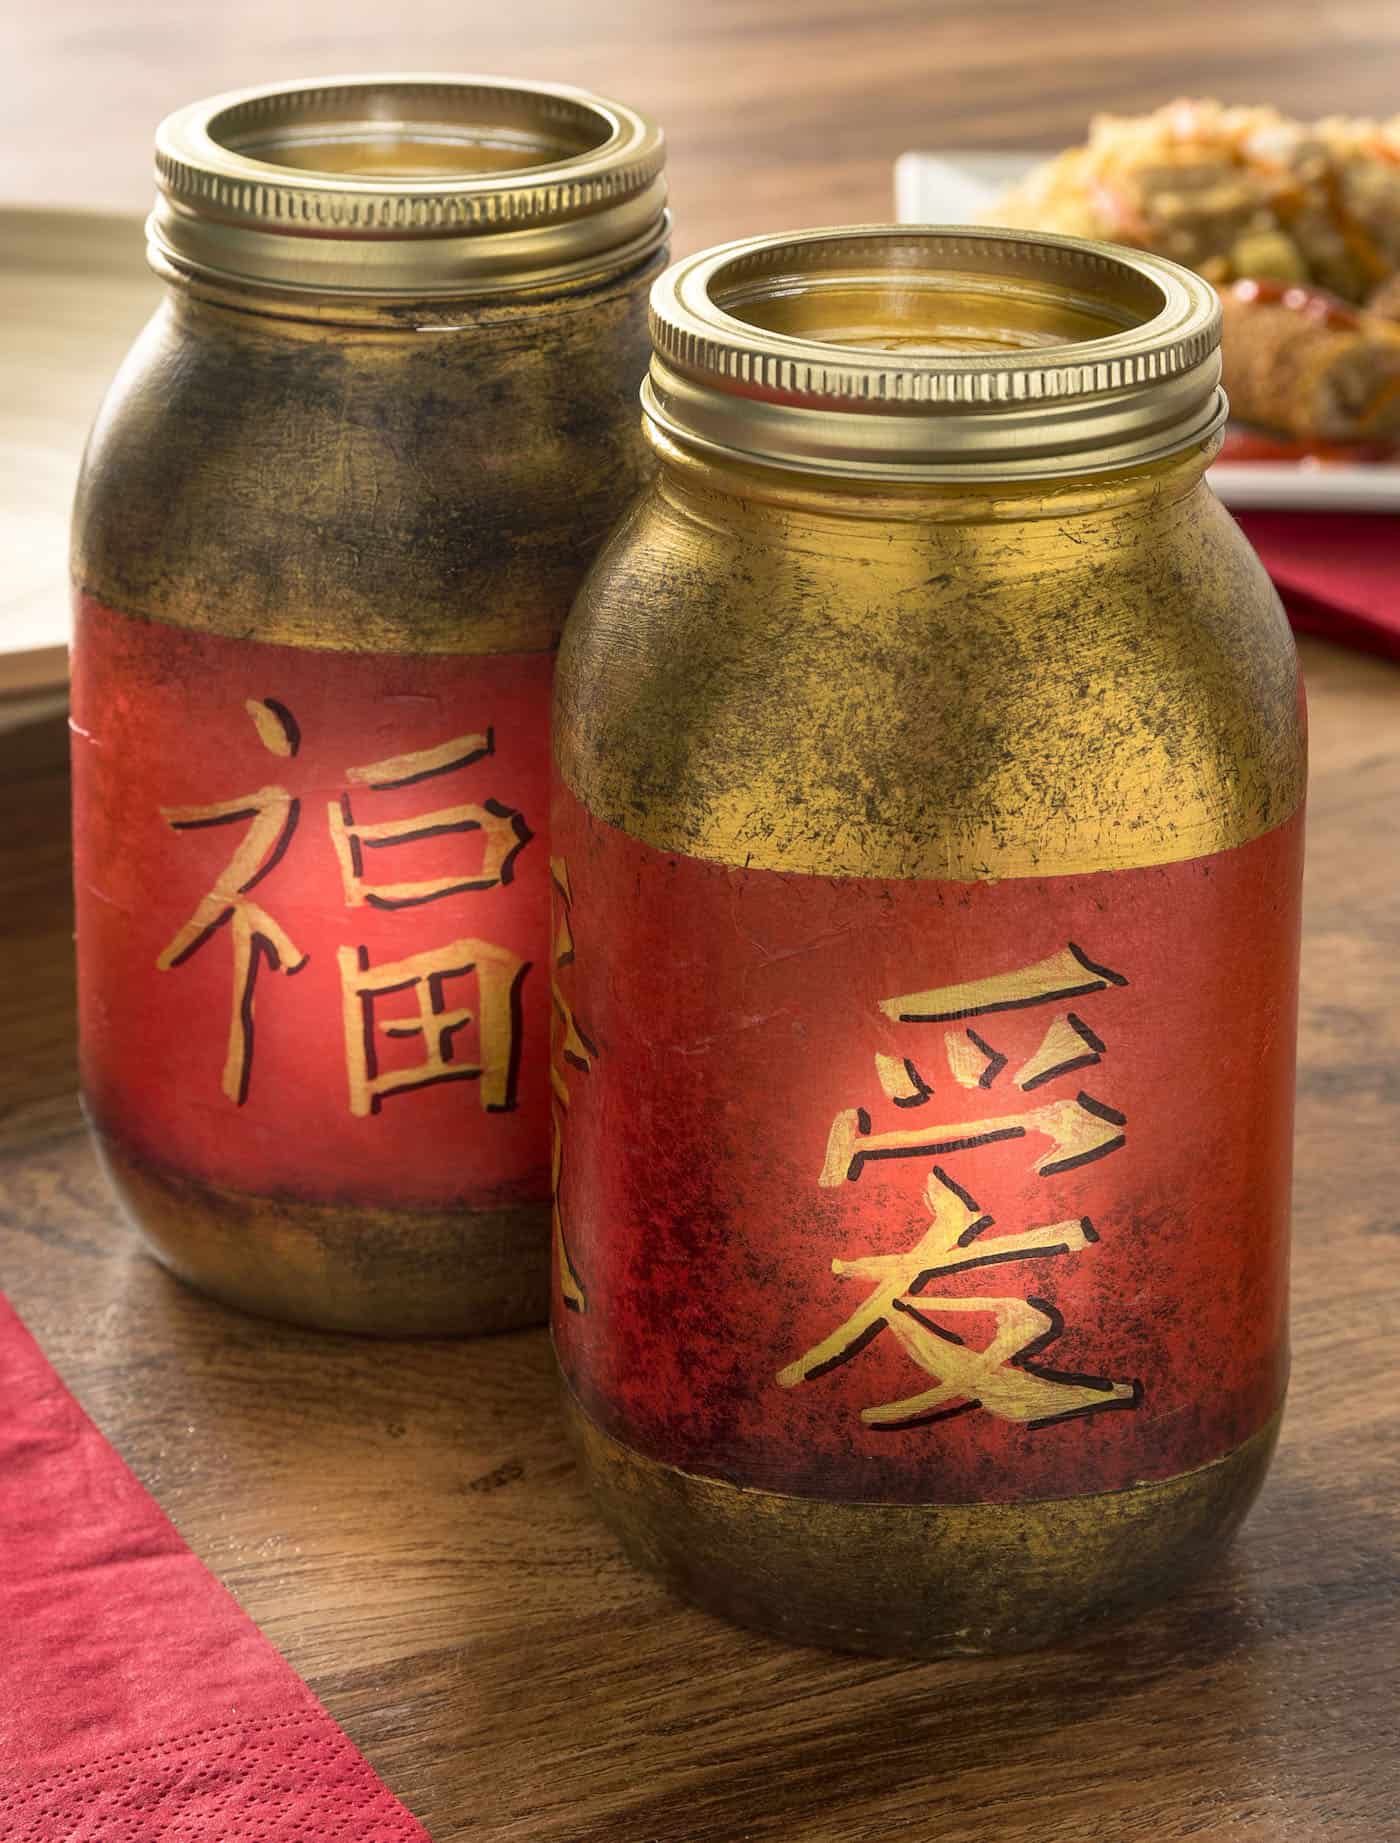 Chinese New Year Lanterns Made with Mason Jars